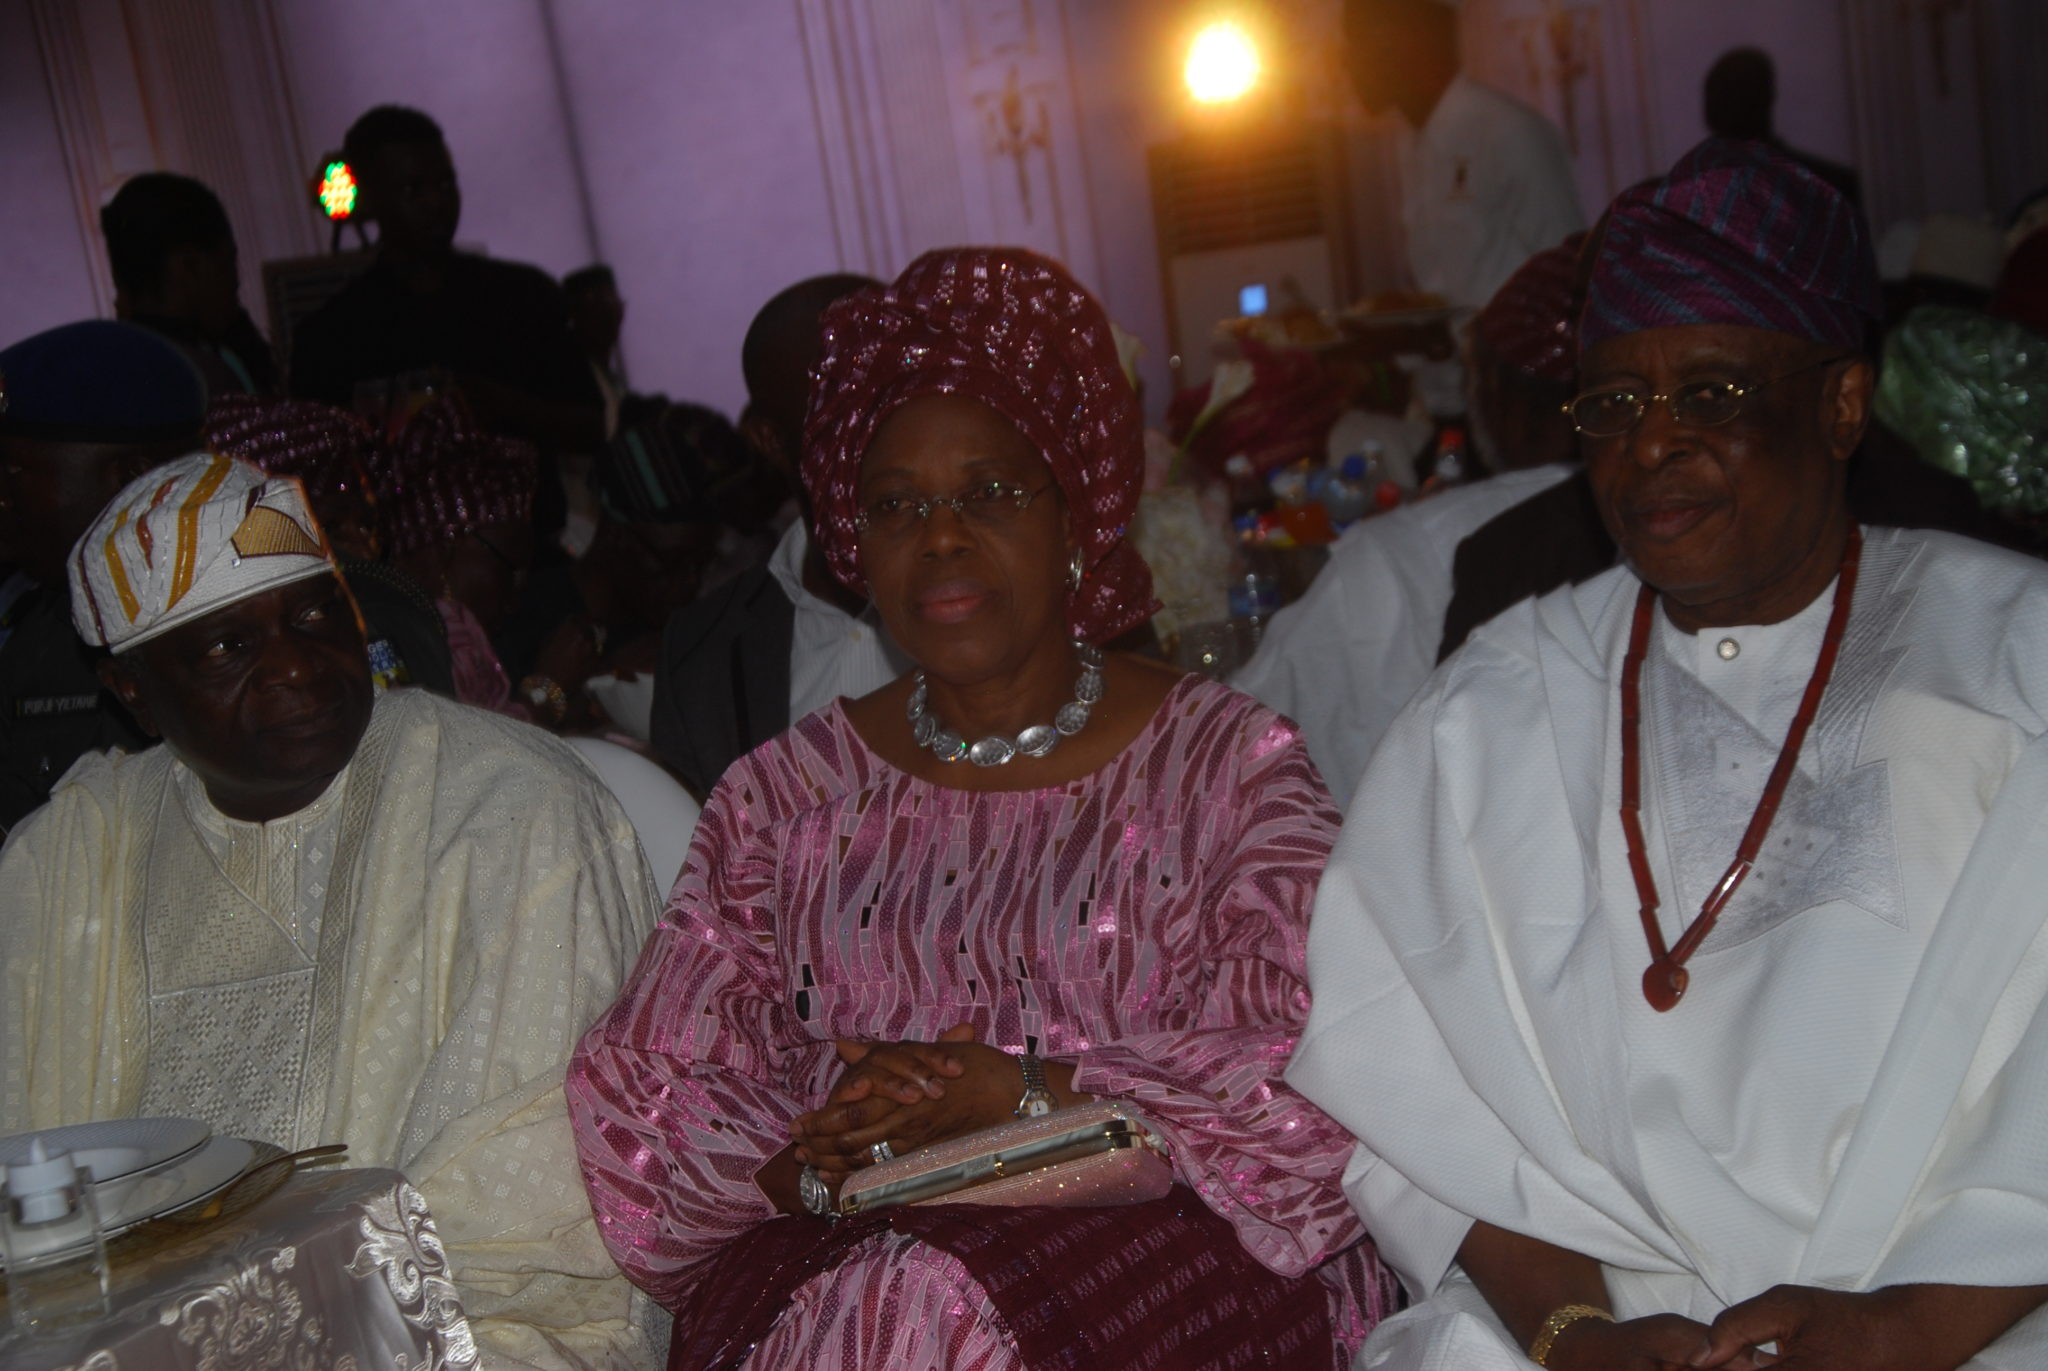 PHOTOS OF THE DAY: Faces at wedding reception for Ajimobi, Ganduje children